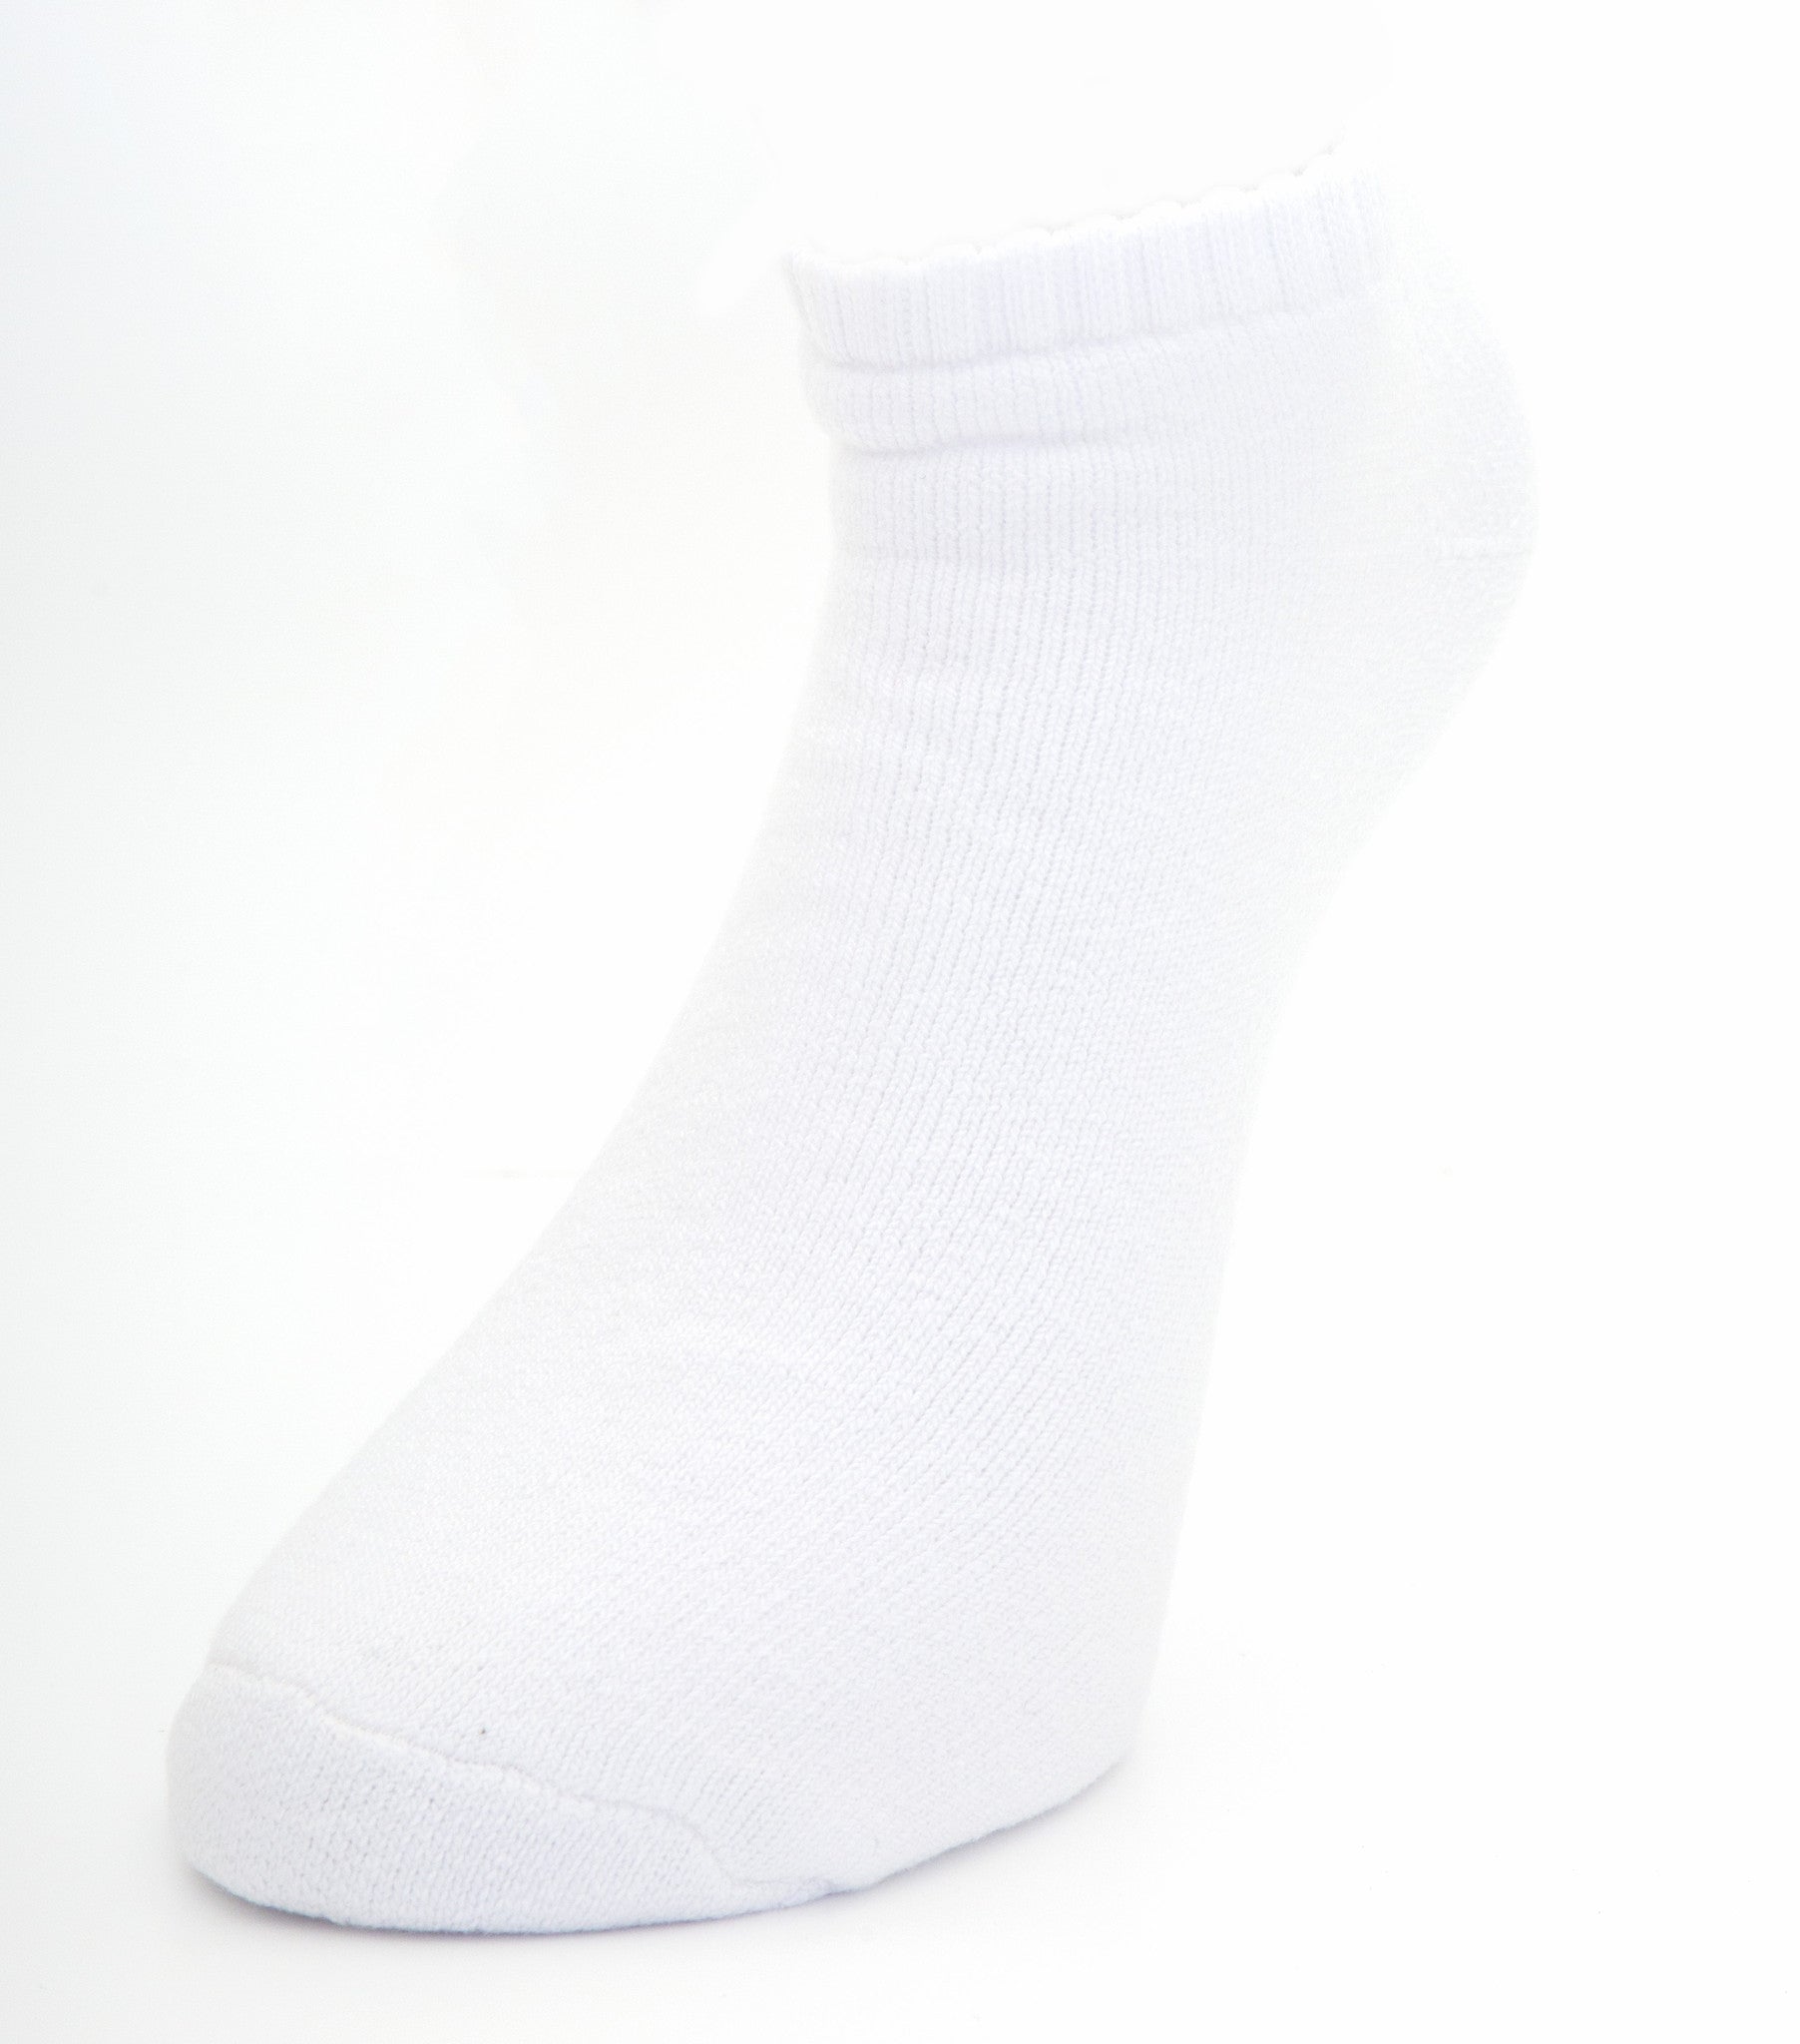 UNISEX 100% Cotton Ankle Socks